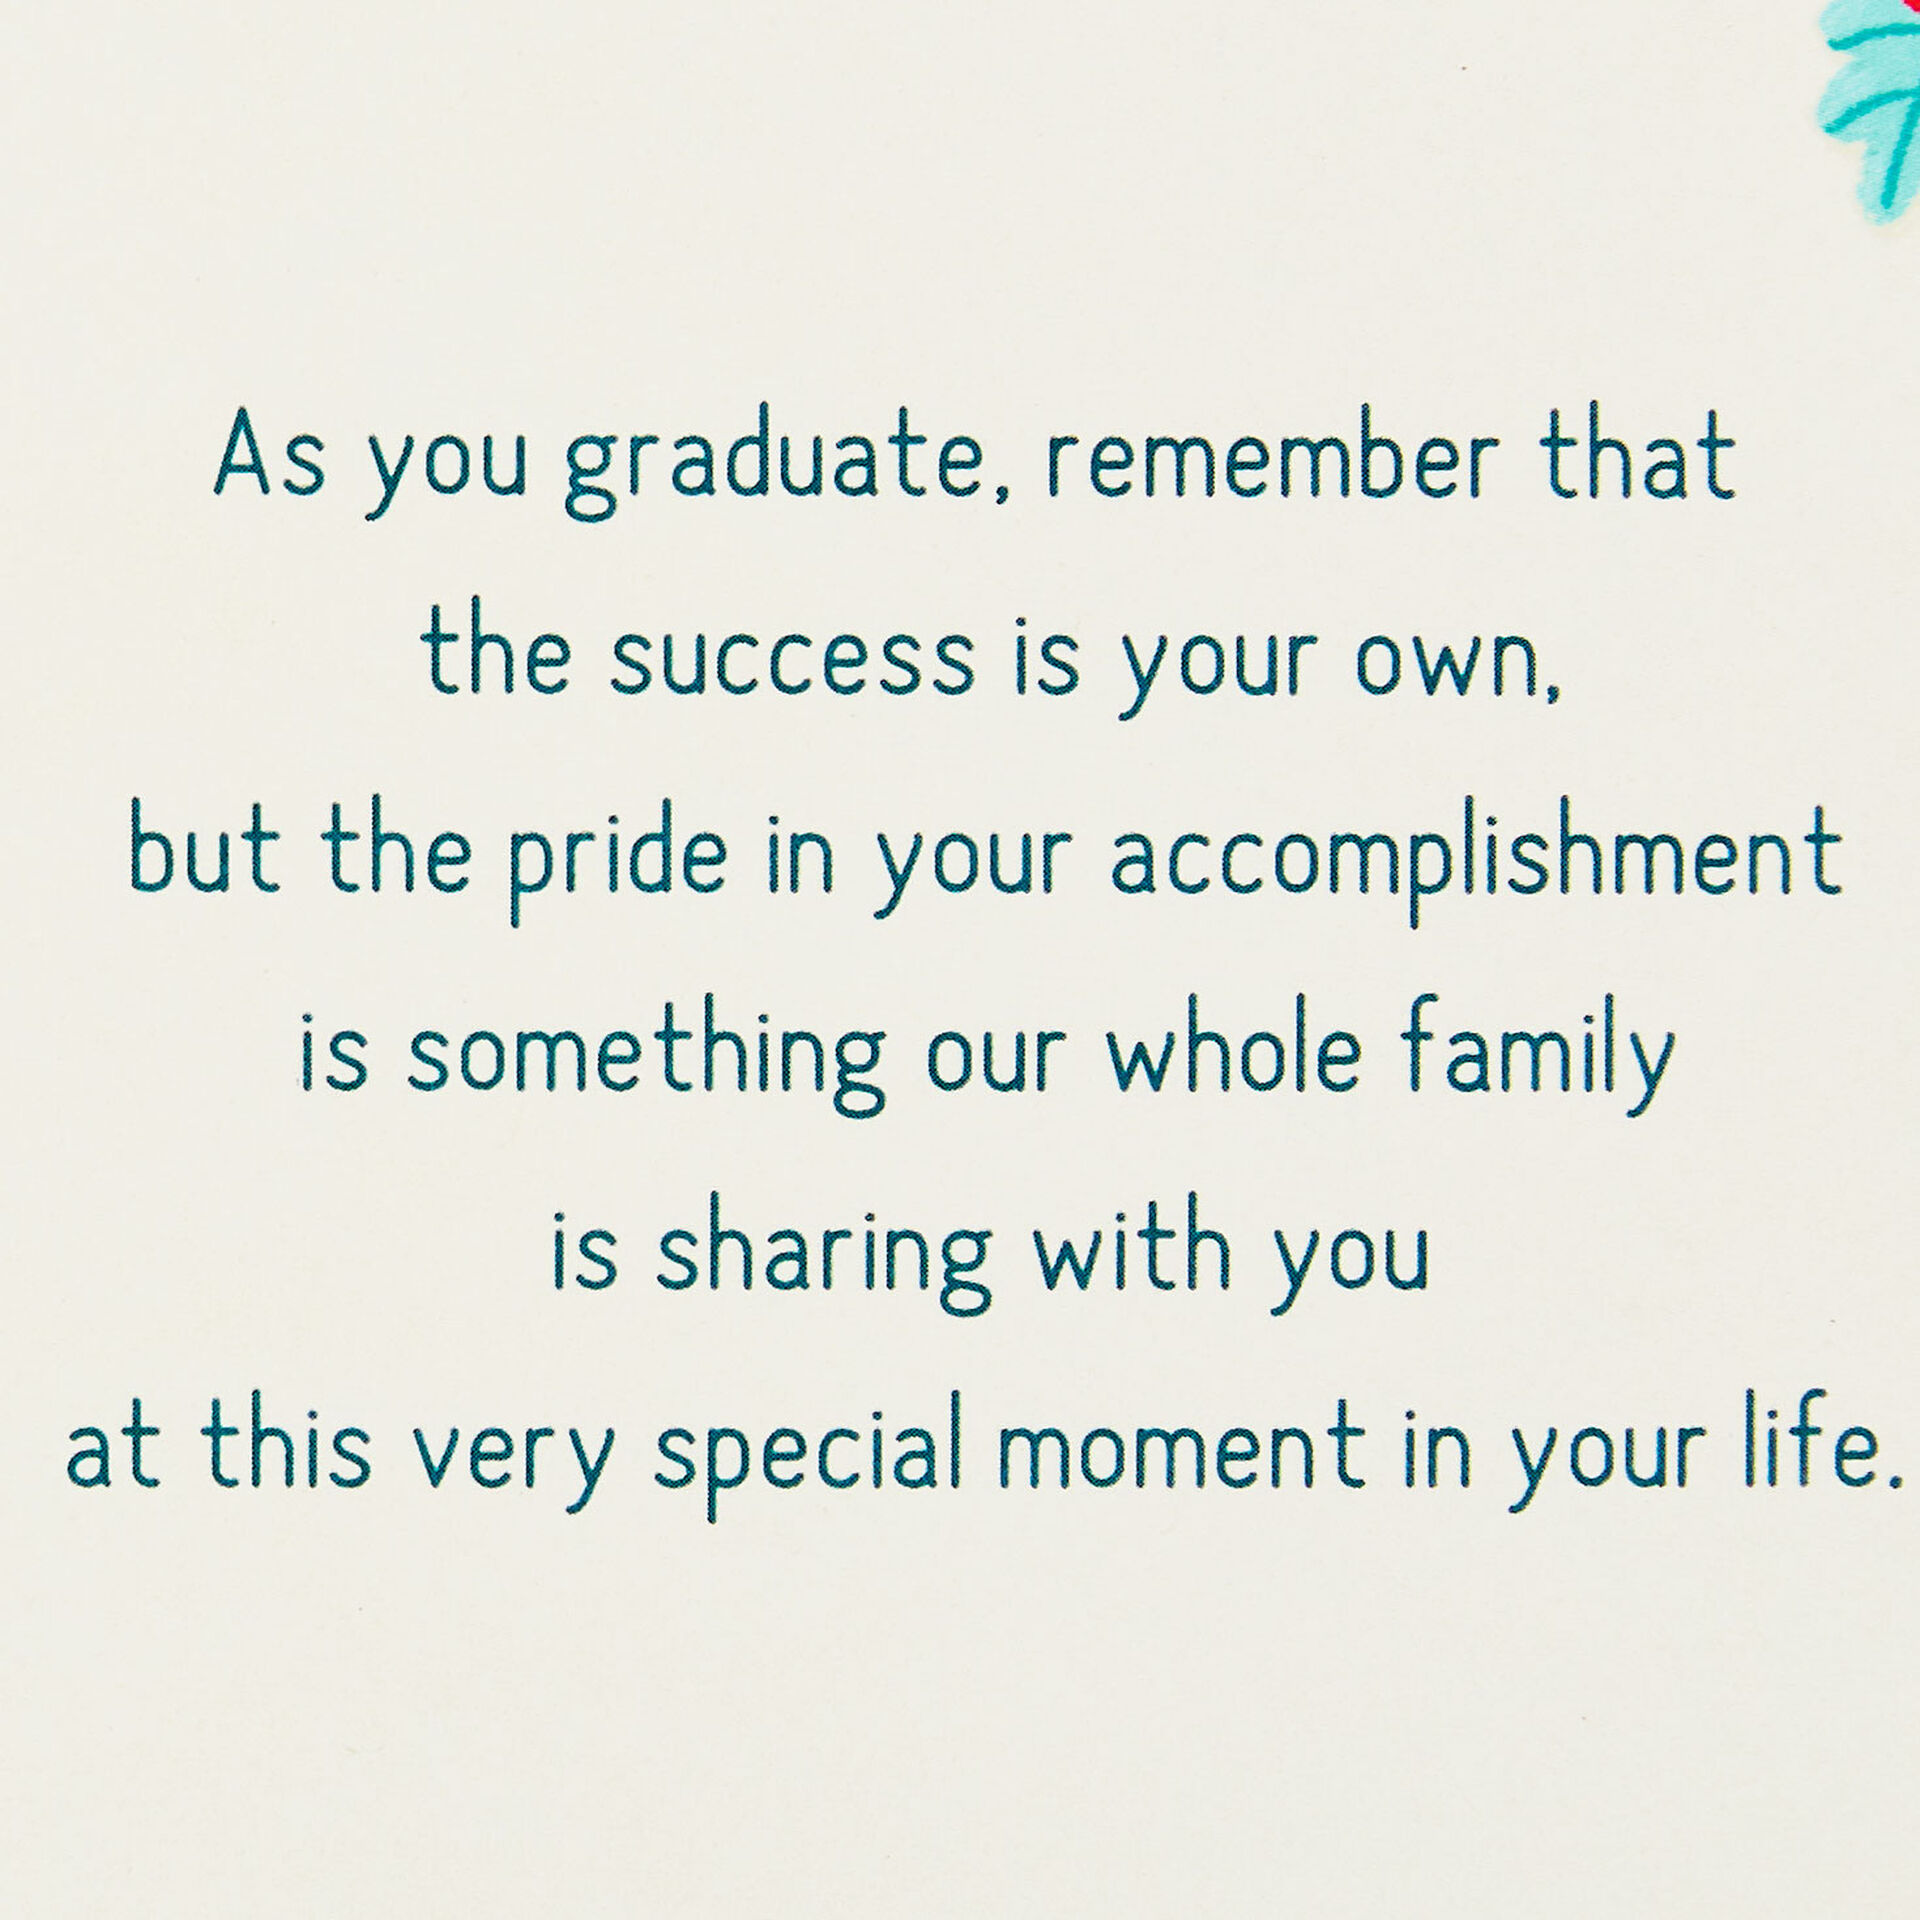 Grad-and-Flowers-GreatGranddaughter-Graduation-Card_299GR4446_02